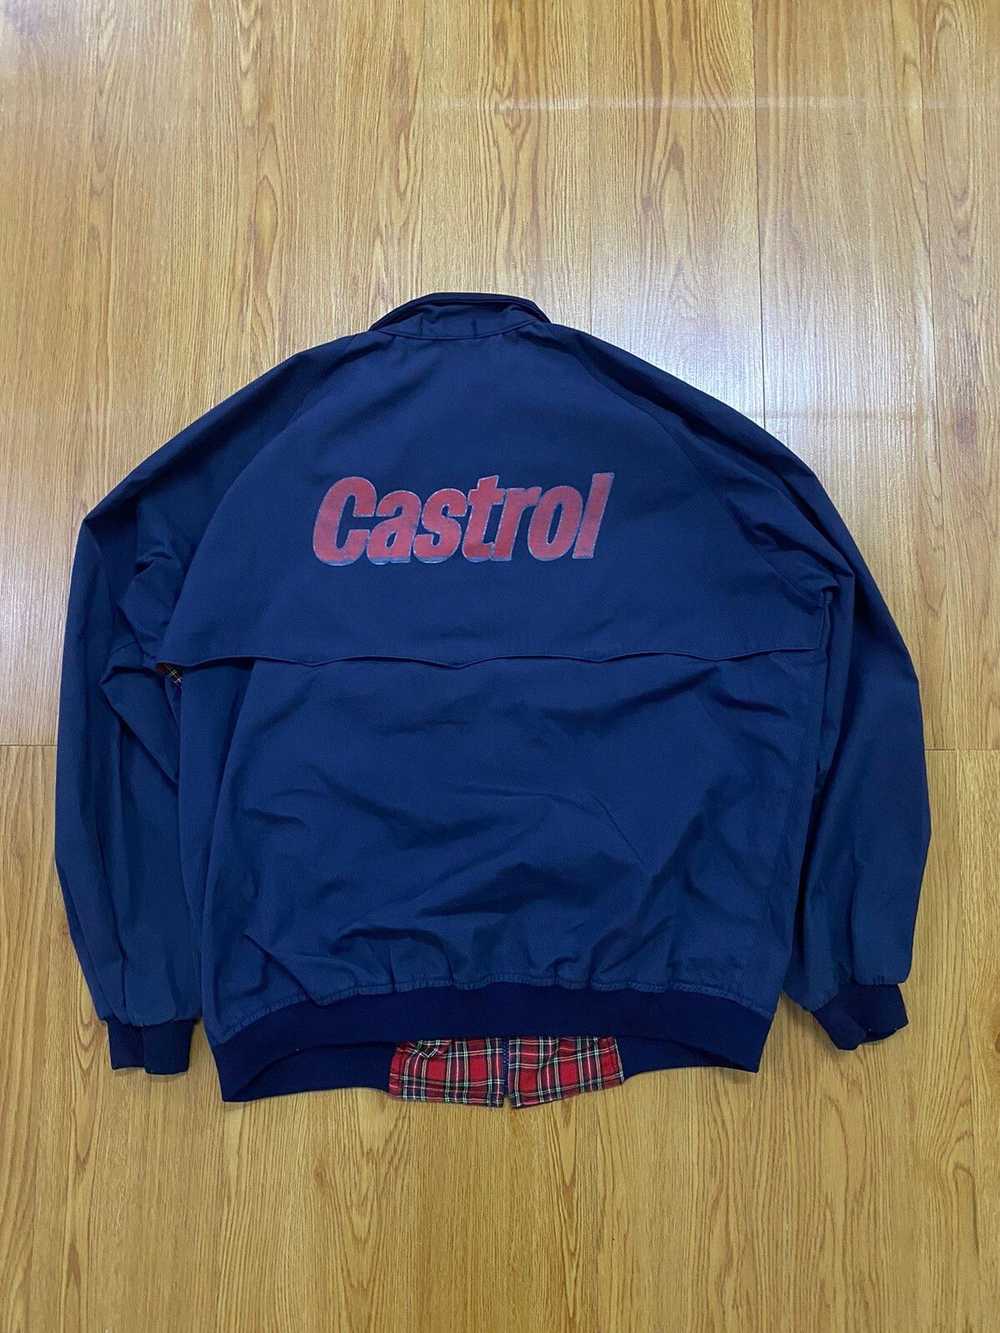 Japanese Brand × Racing Castrol Industrial Jacket - image 1